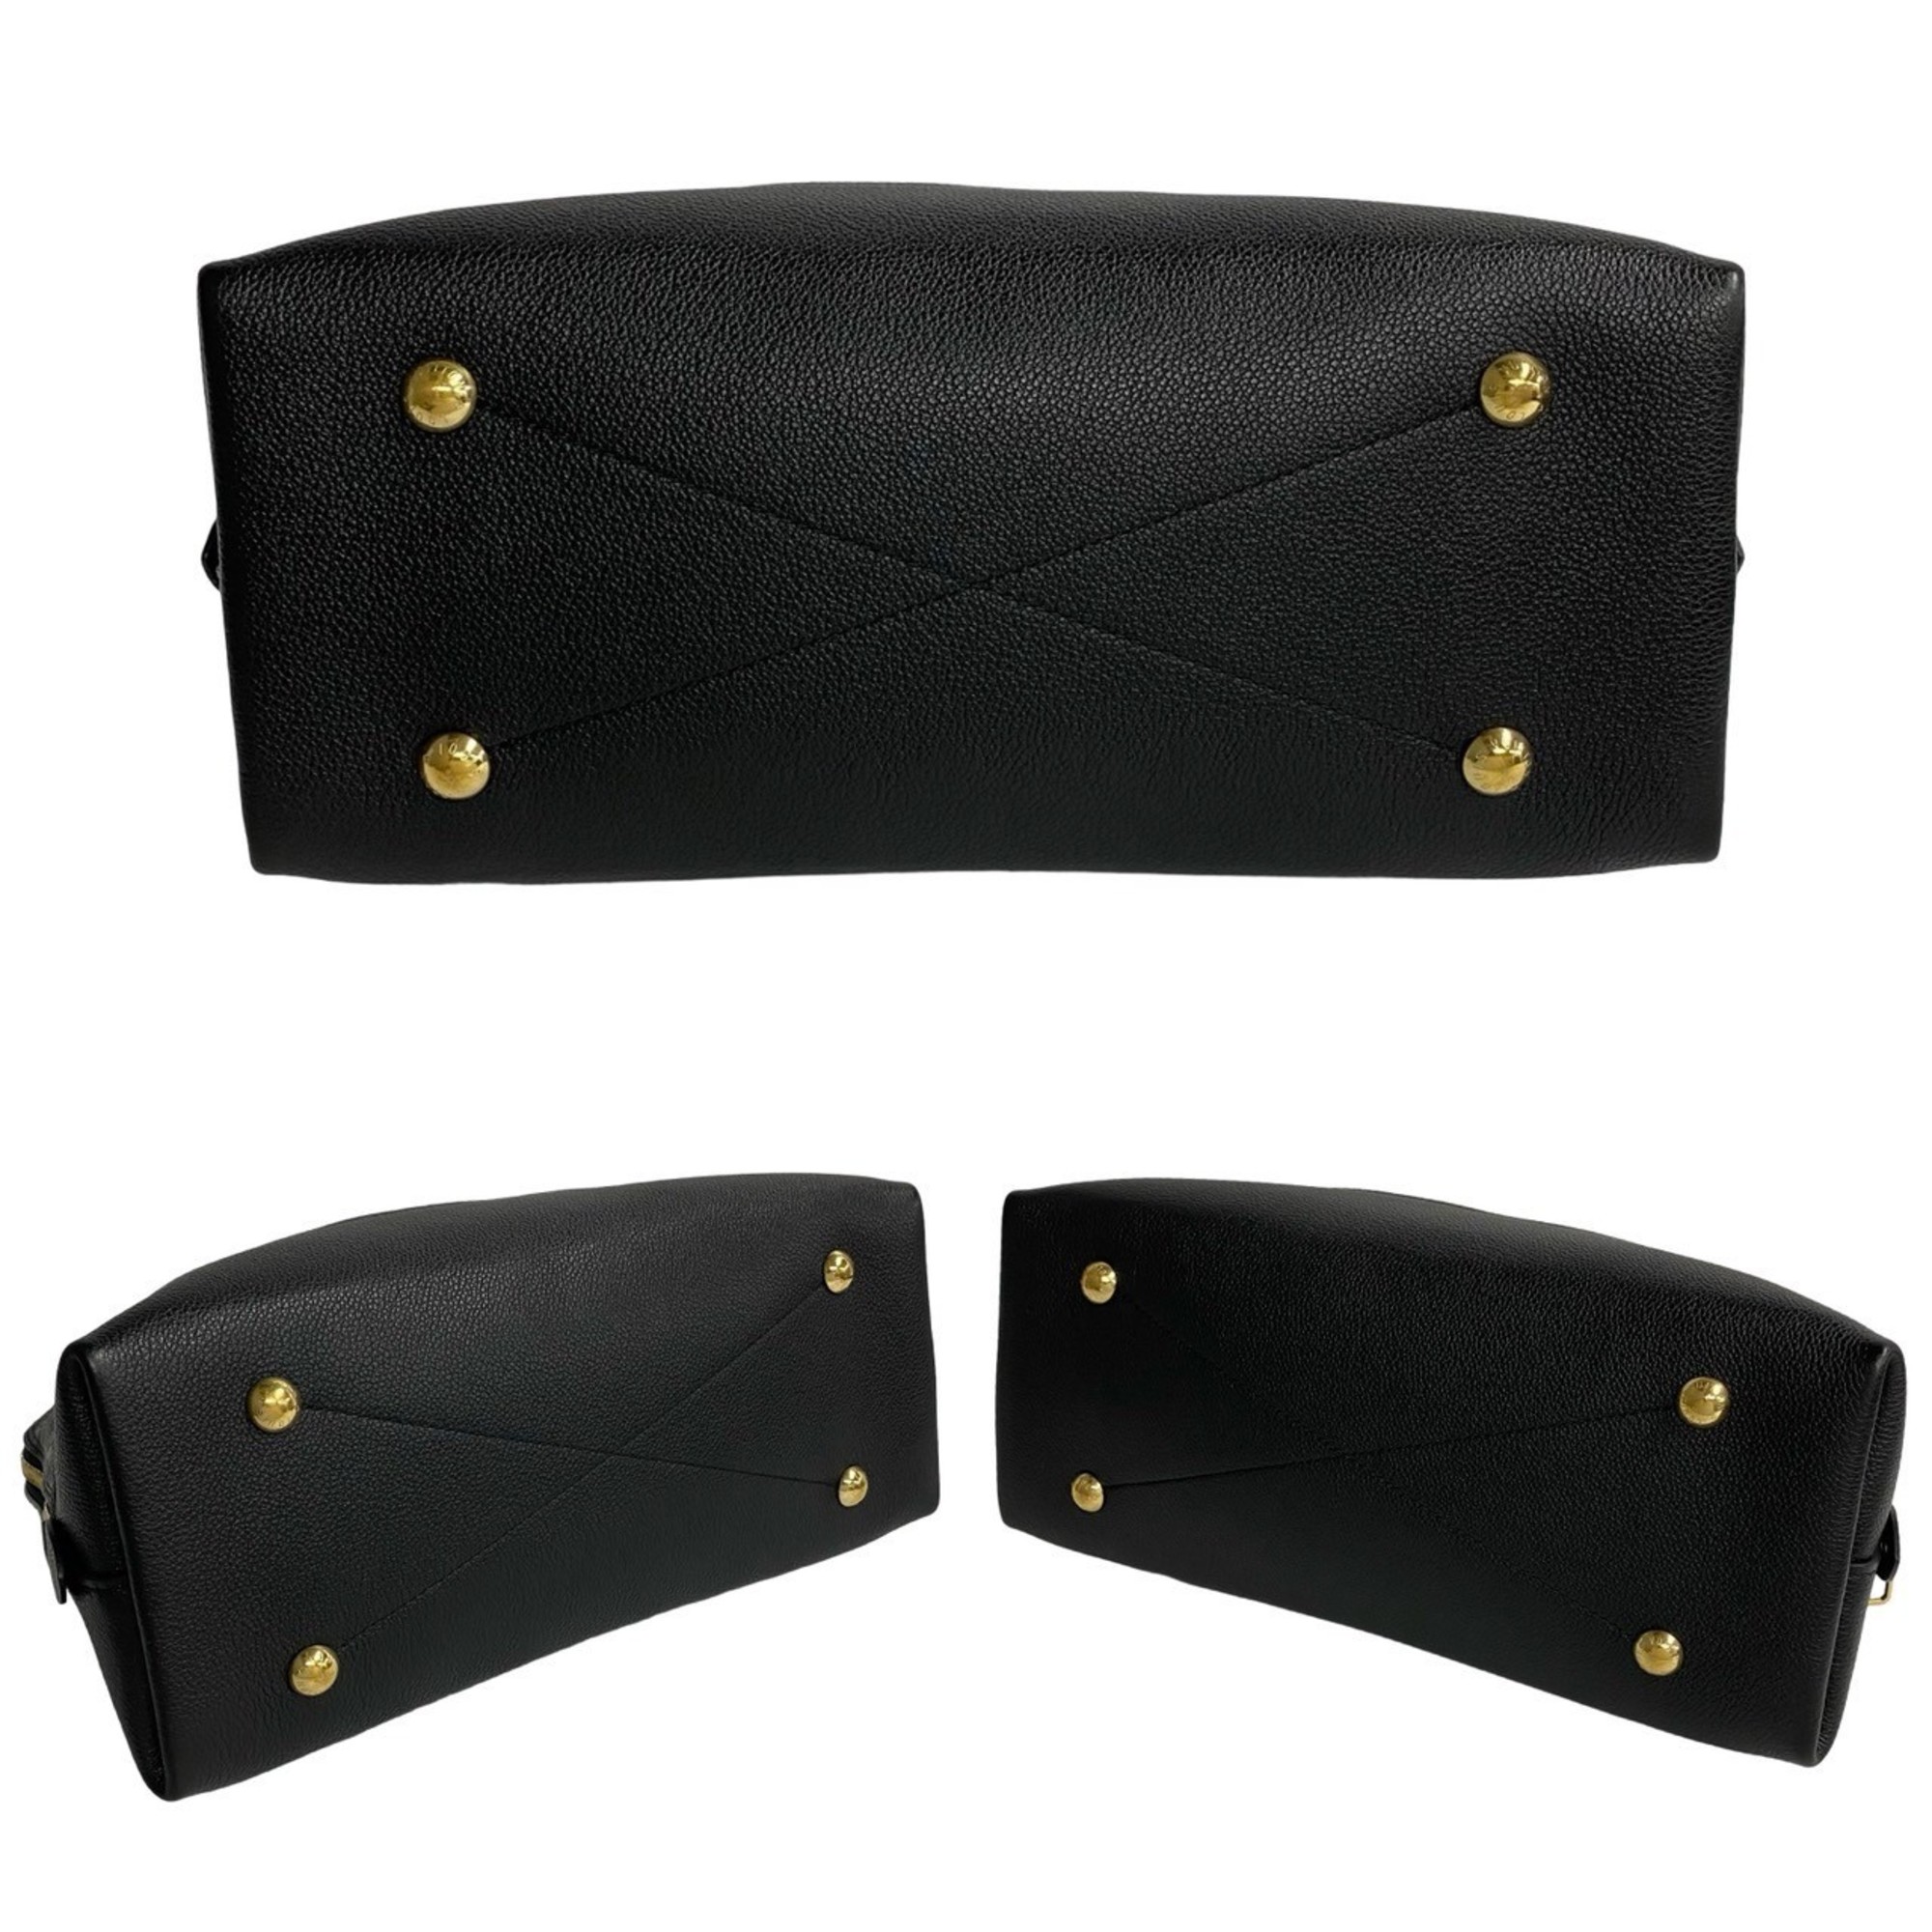 LOUIS VUITTON Louis Vuitton Neo Alma PM Monogram Empreinte Leather 2way Handbag Shoulder Bag 31305